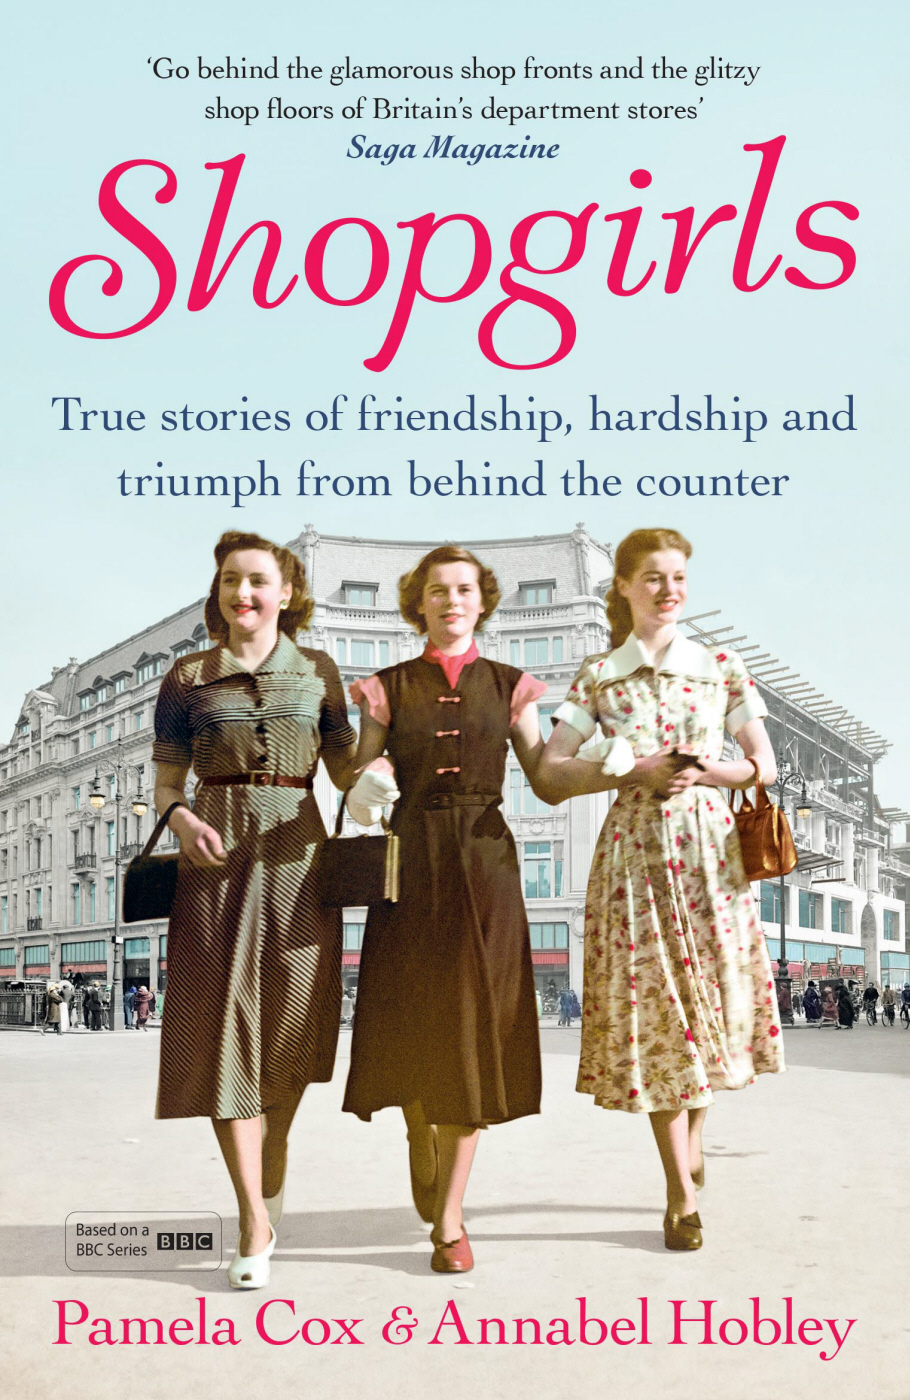 Shopgirls by Pamela Cox